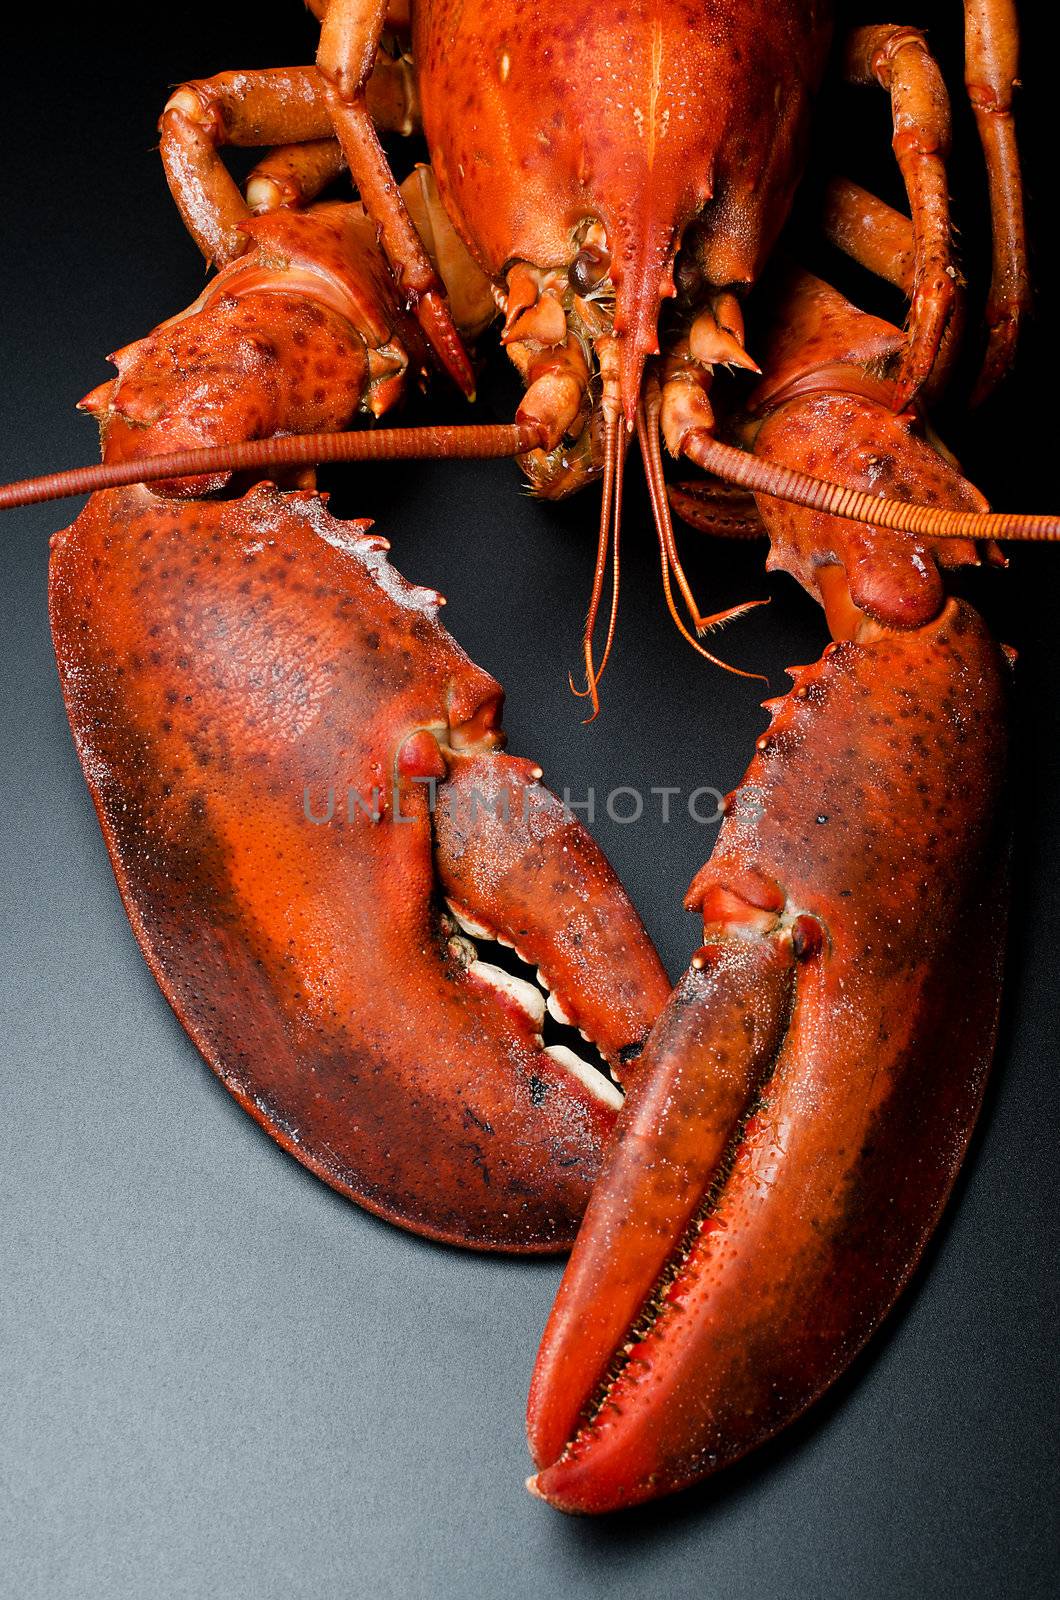 Prepared lobster on black background